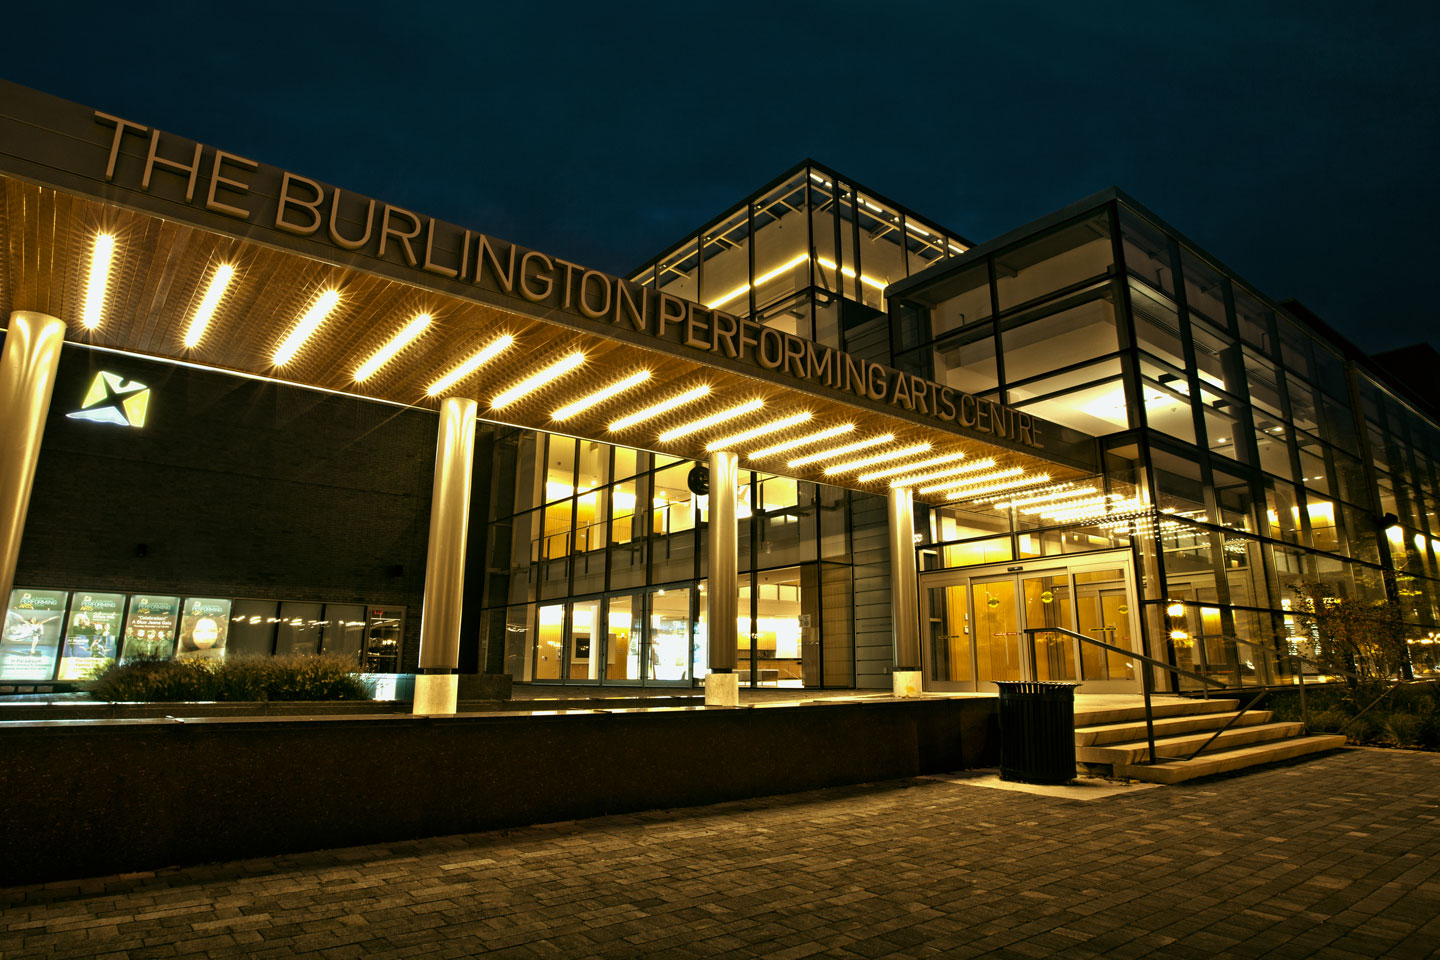 The Burlington Performing Arts Centre